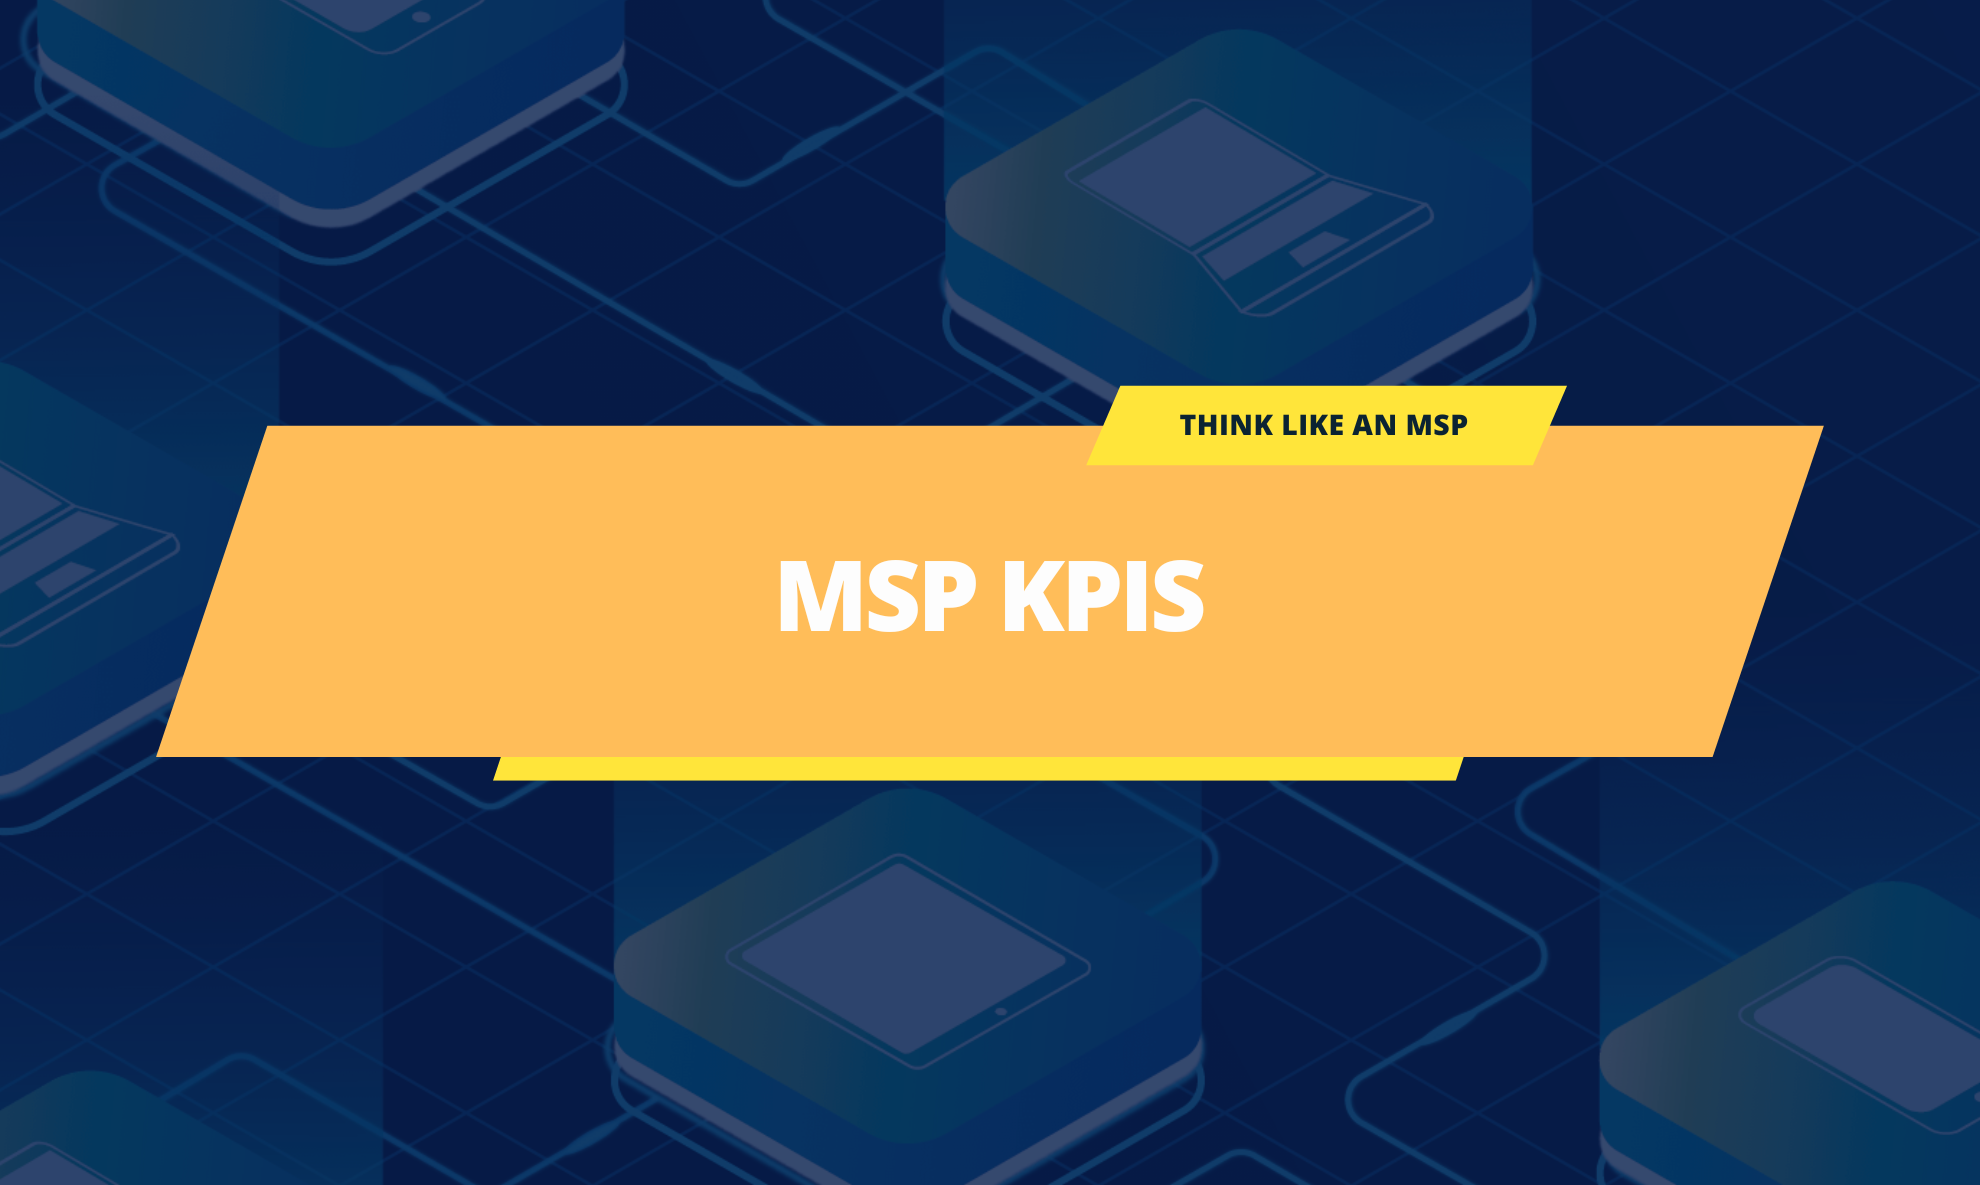 MSP KPIs: 8 Key Performance Indicators to Monitor and Track